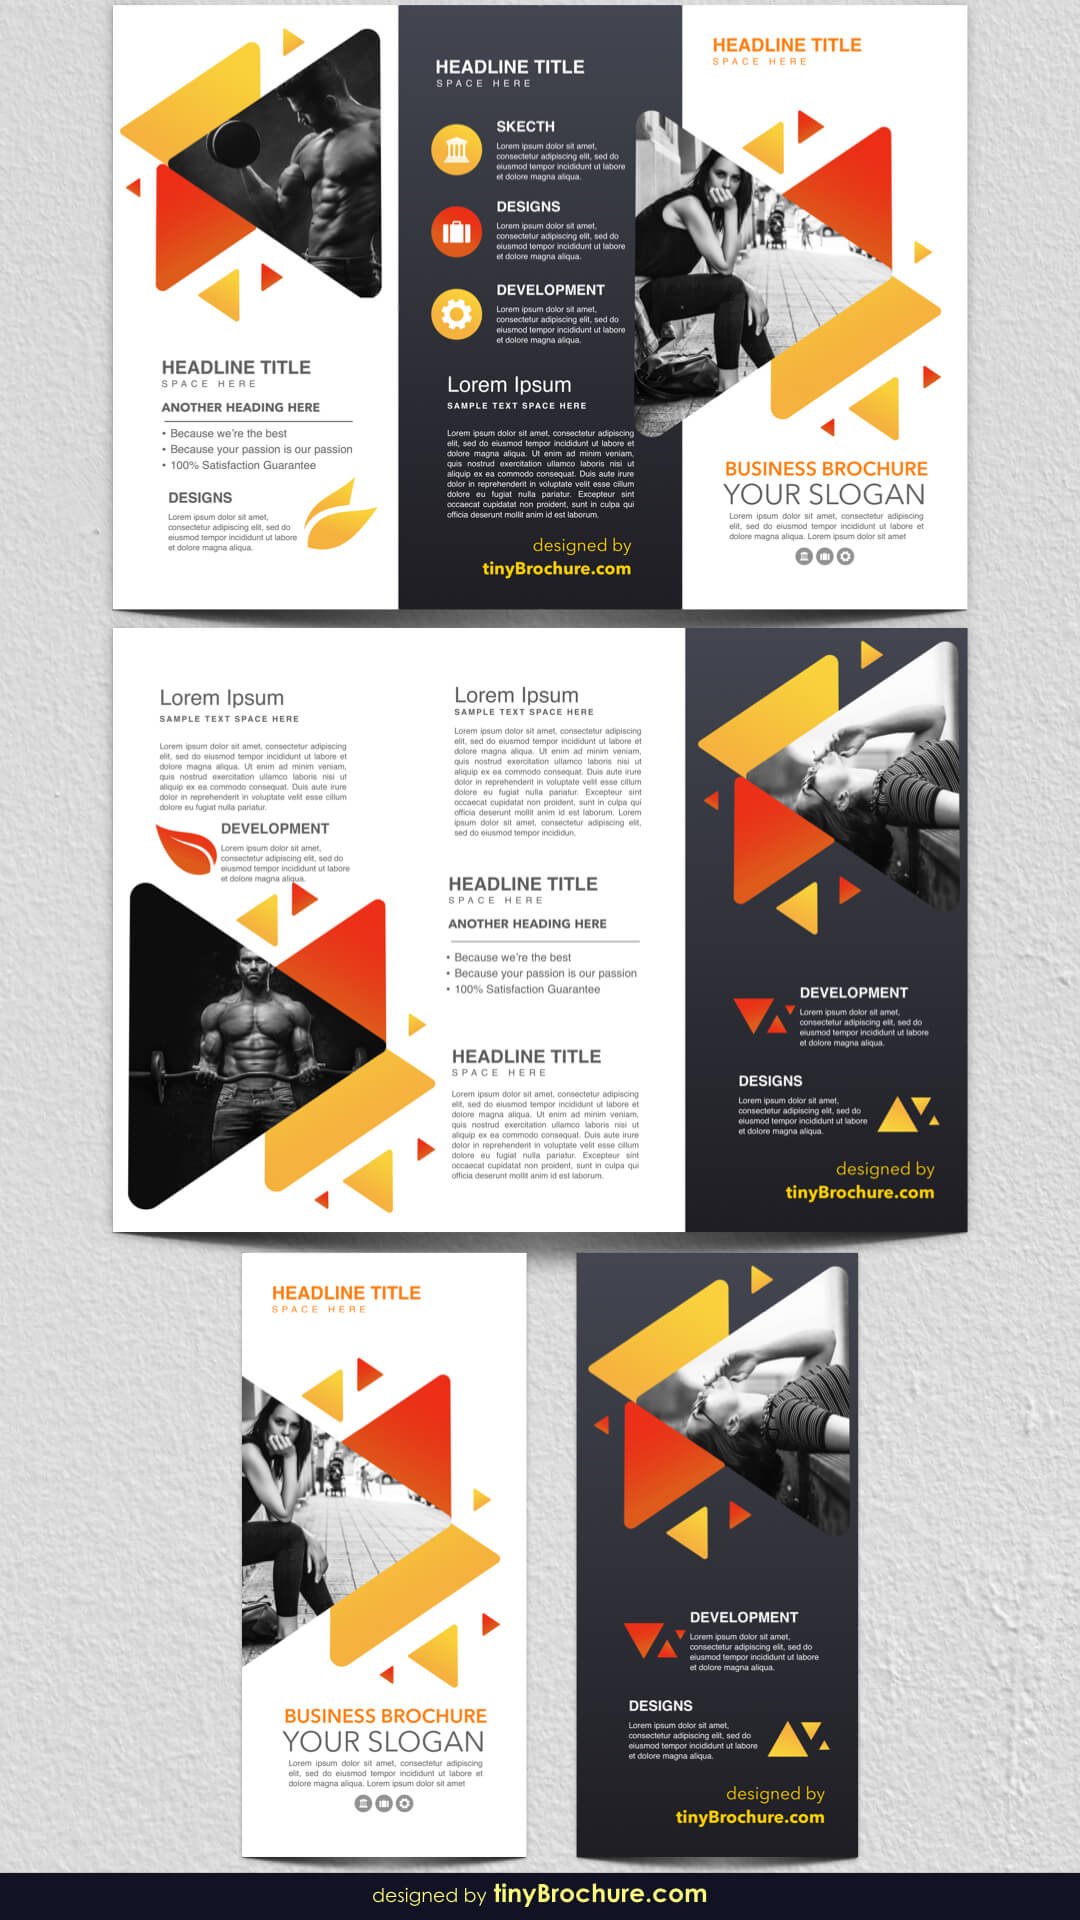 3 Panel Brochure Template Google Docs 2019 | Graphic Design Regarding Google Docs Travel Brochure Template